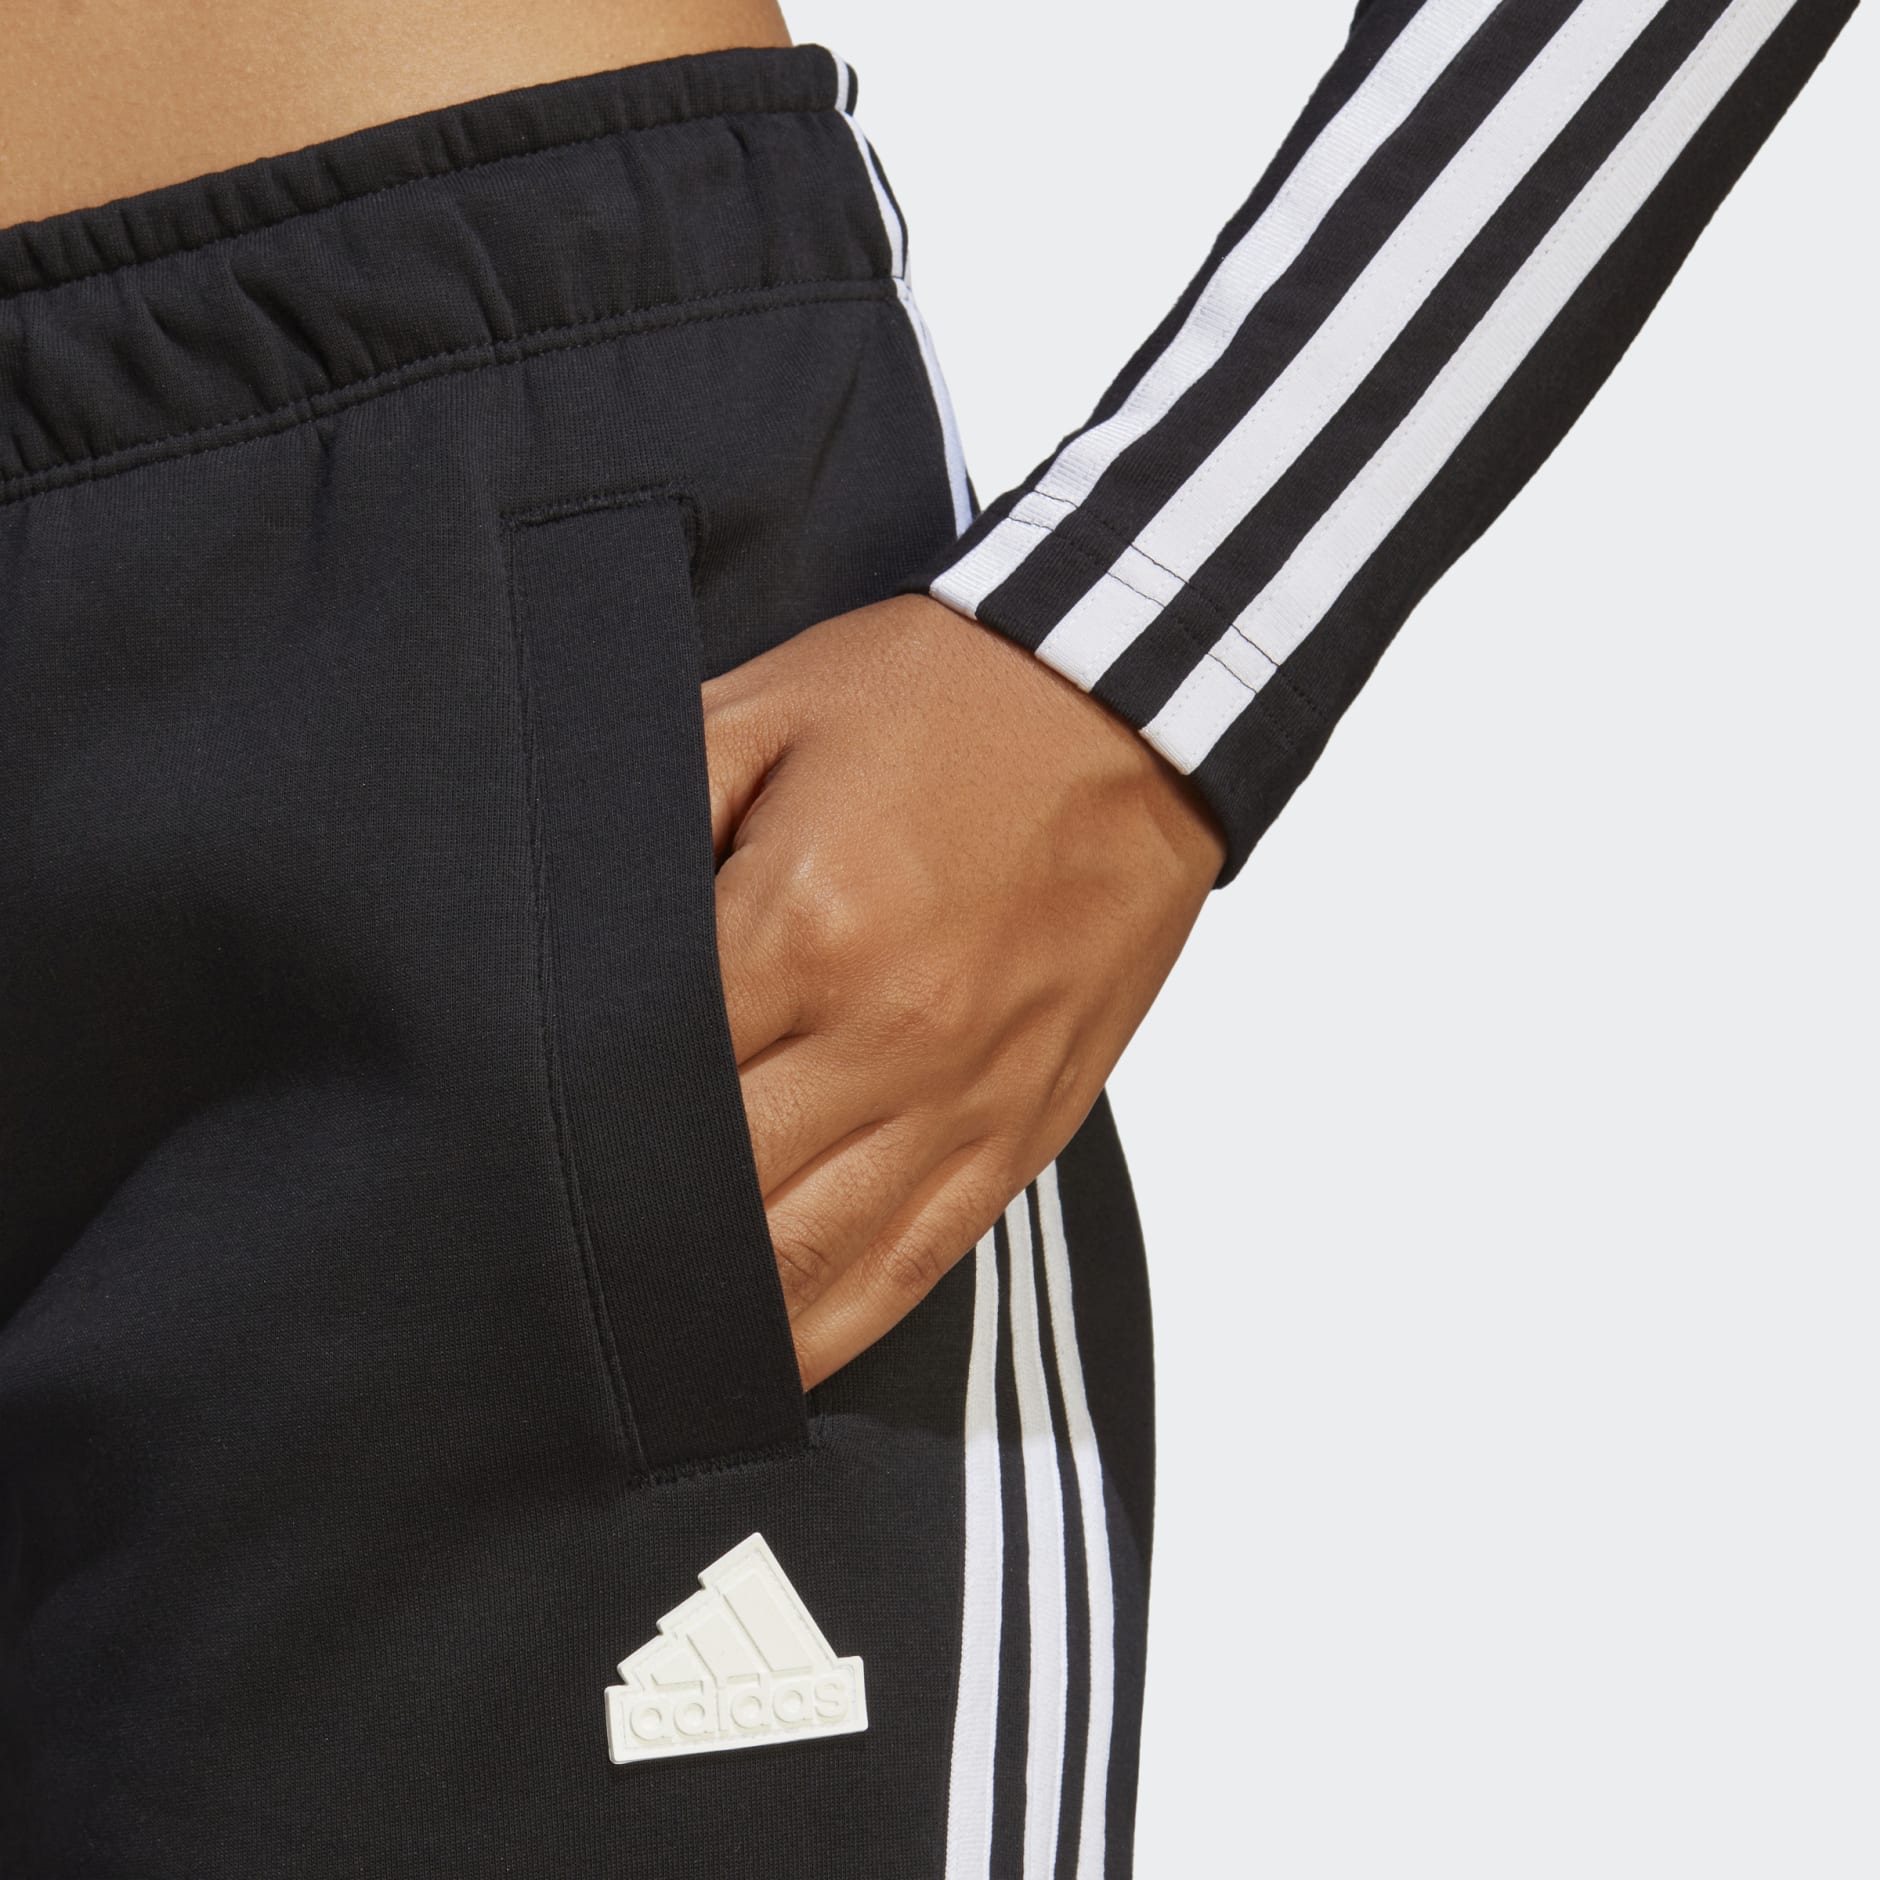 Shop adidas Future Icon 3-Stripes Pants Black